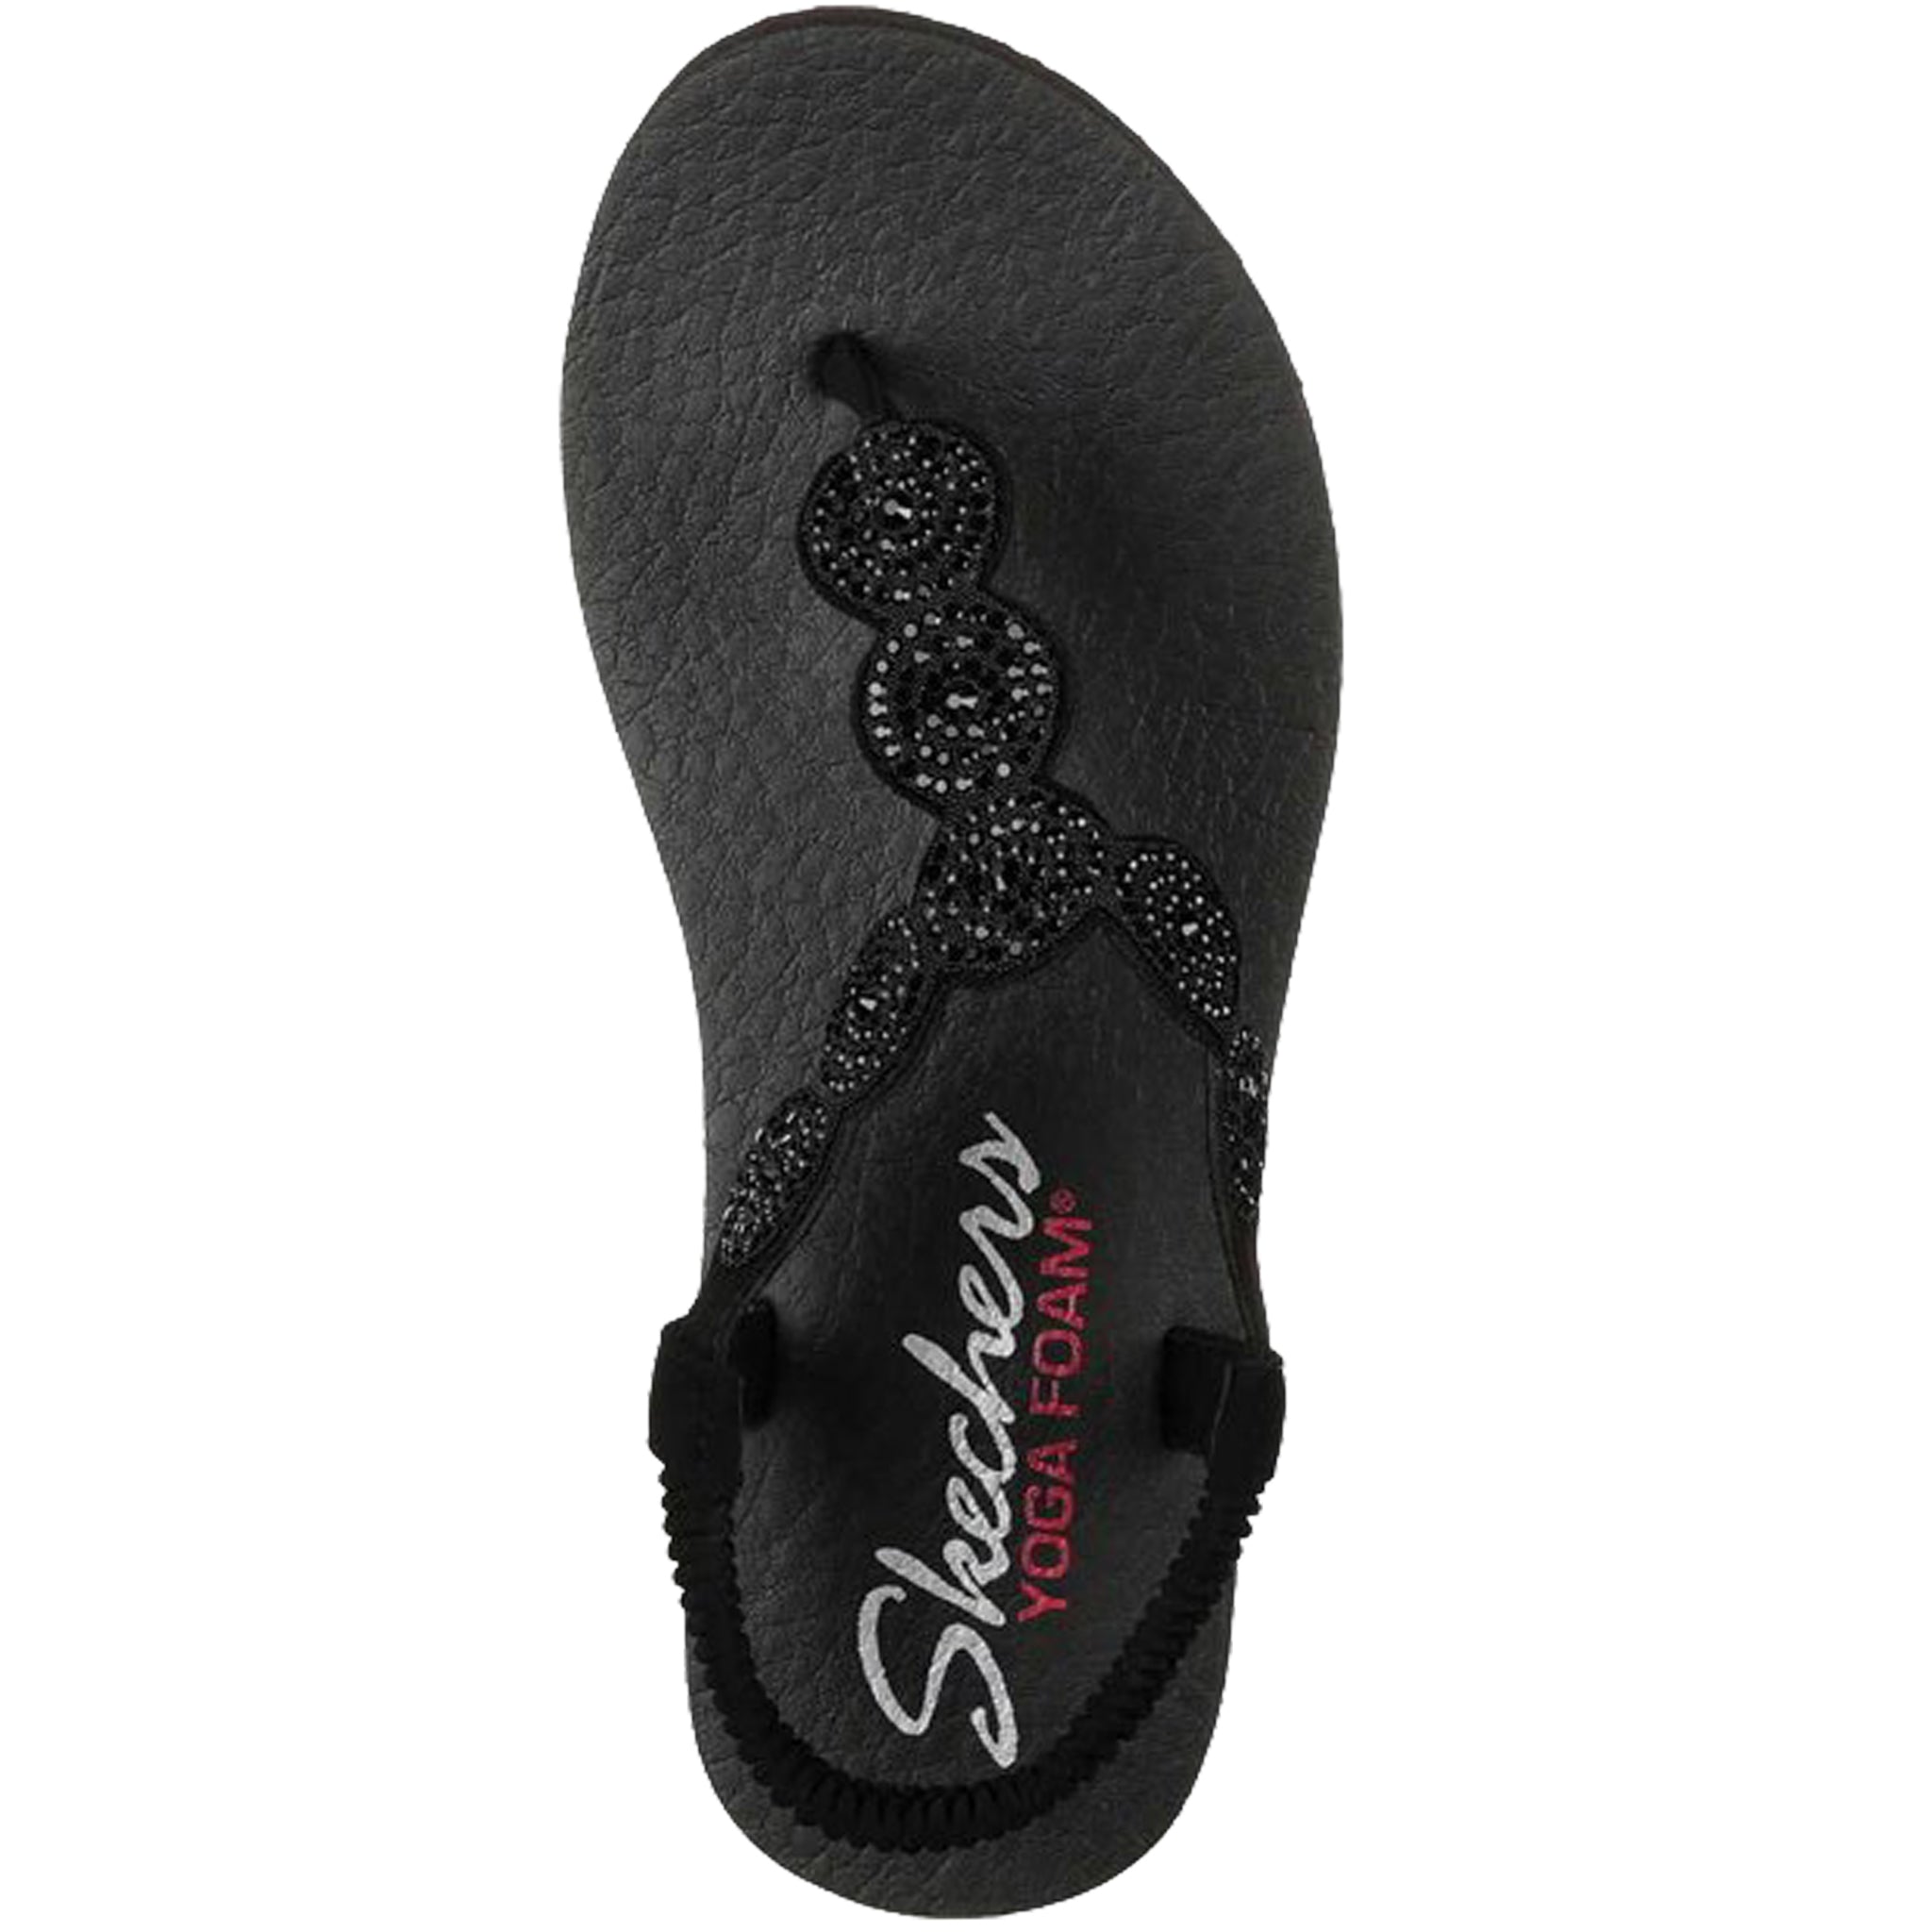 Skechers Sandals Size 8 Black Yoga Foam Studded Thong High Wedge Adult